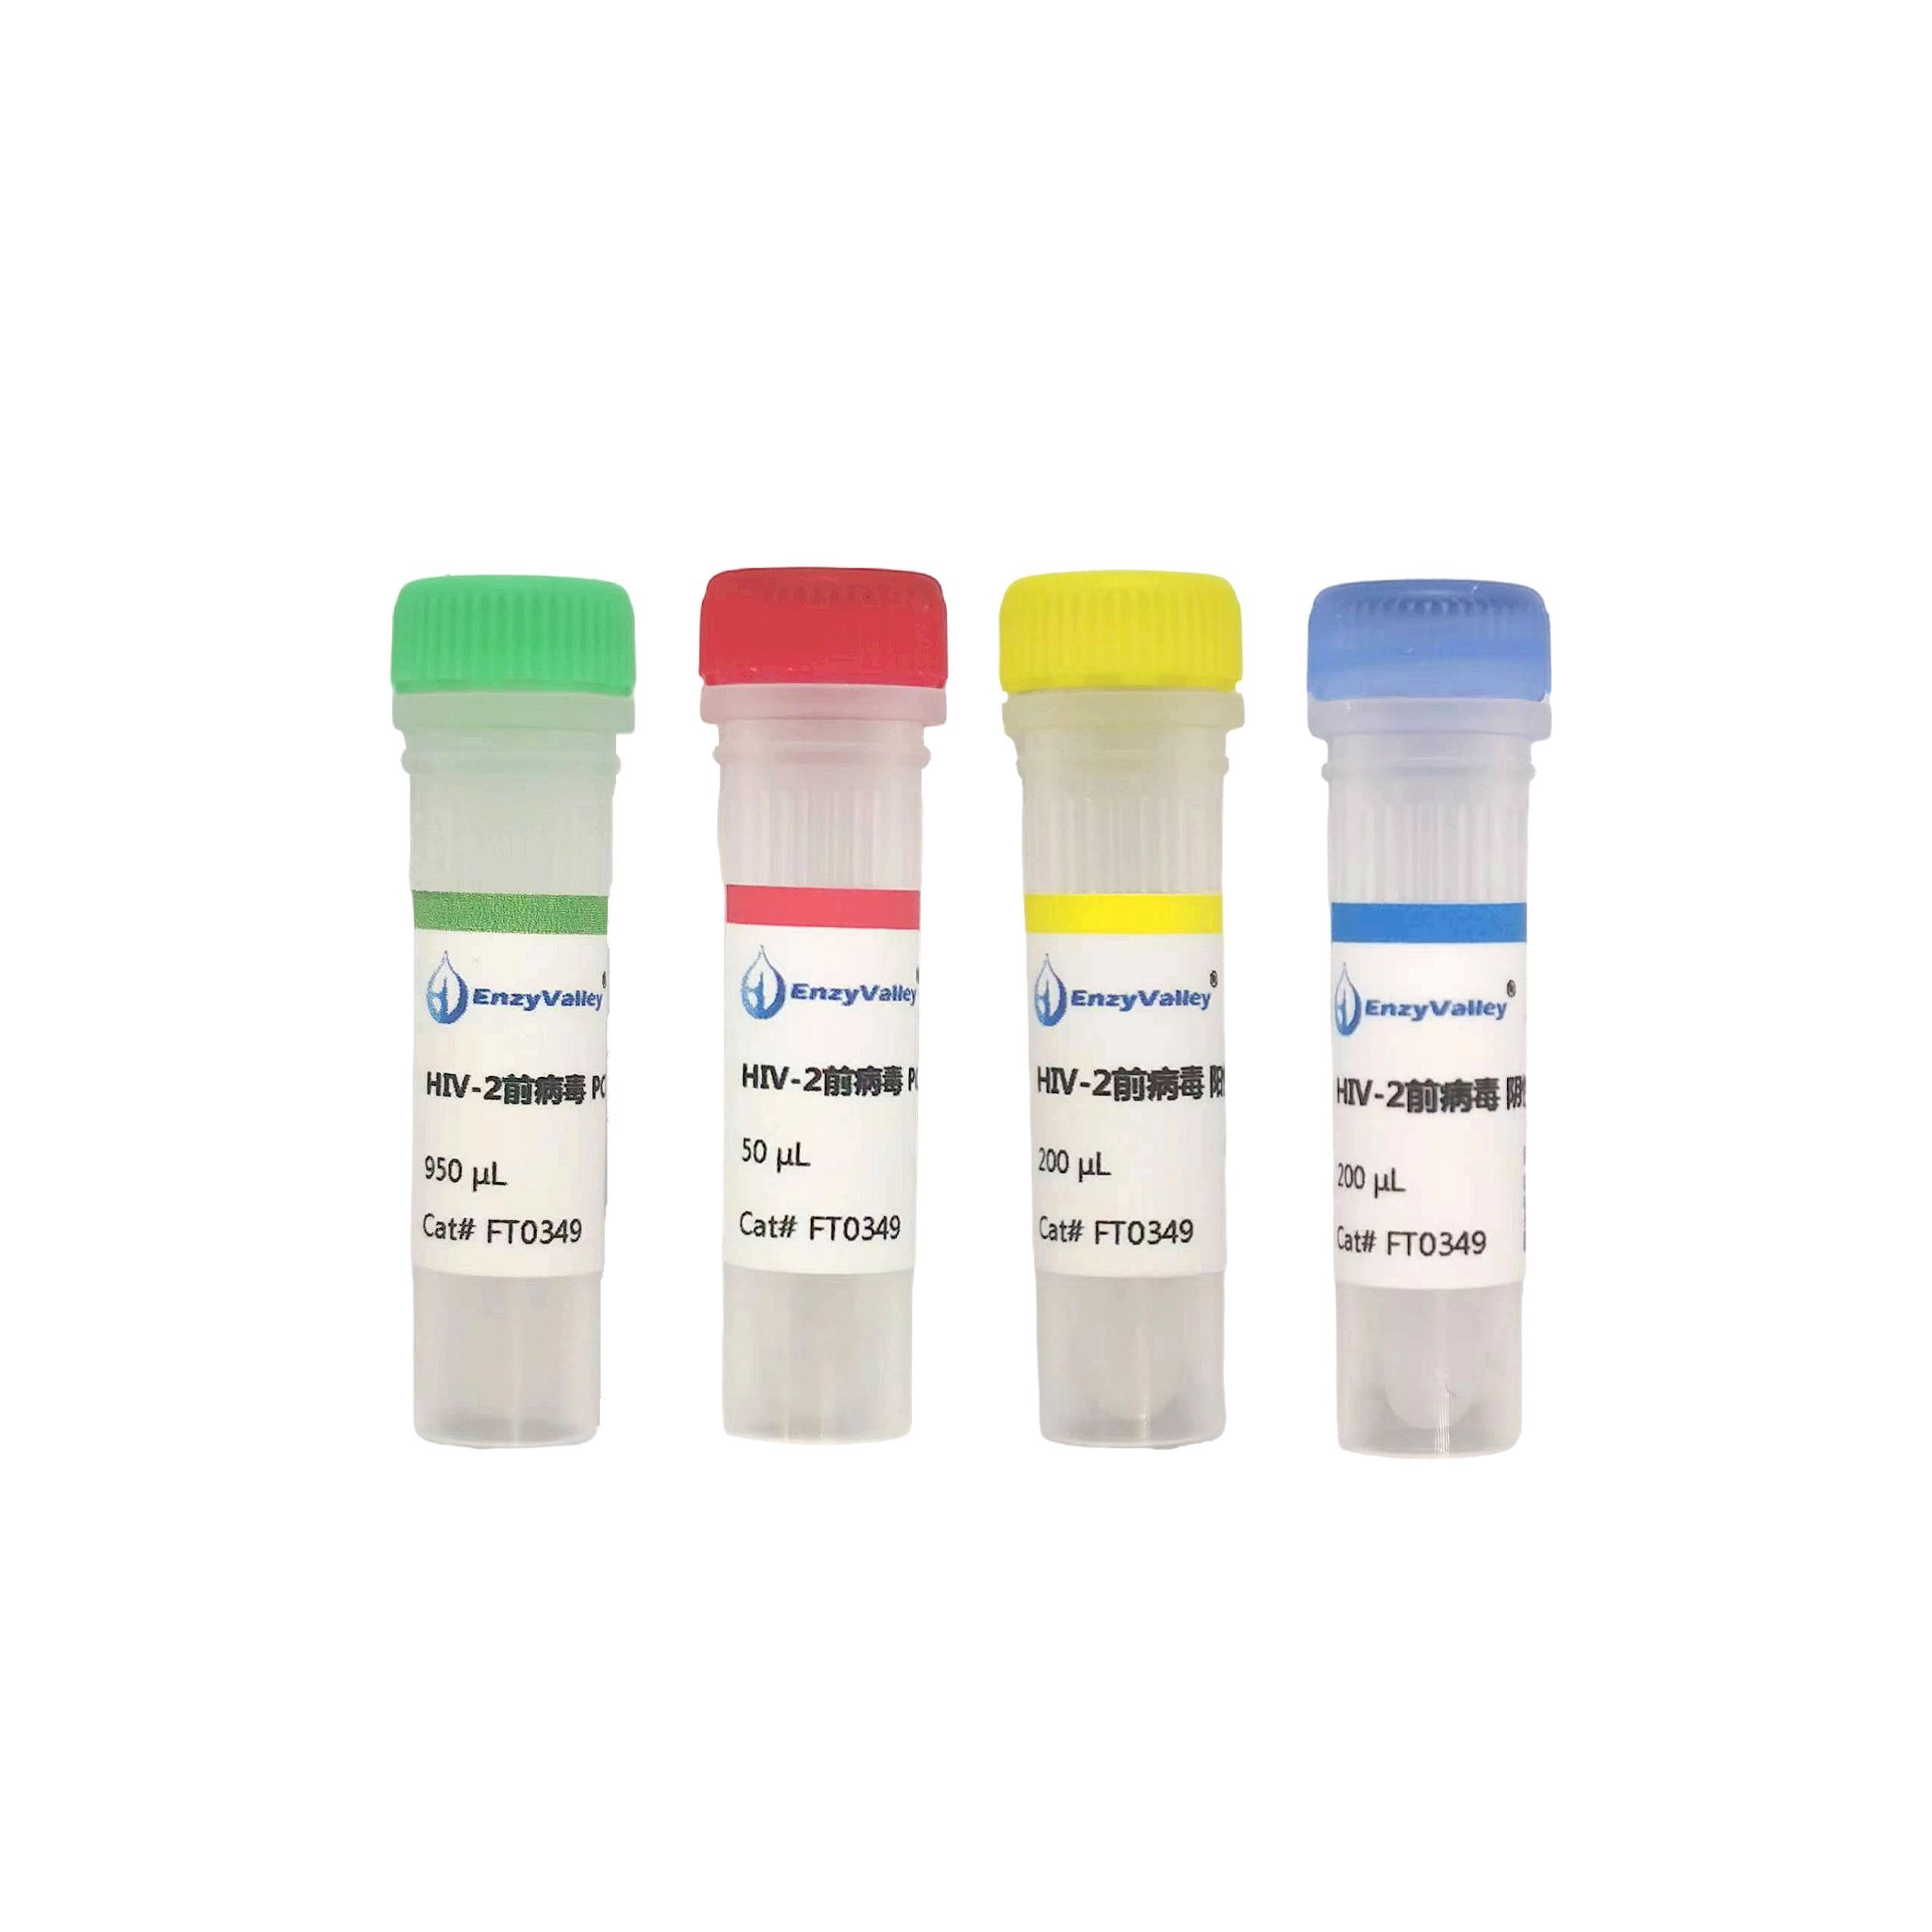 HIV-2前病毒探针法荧光定量PCR试剂盒  （FT0349）